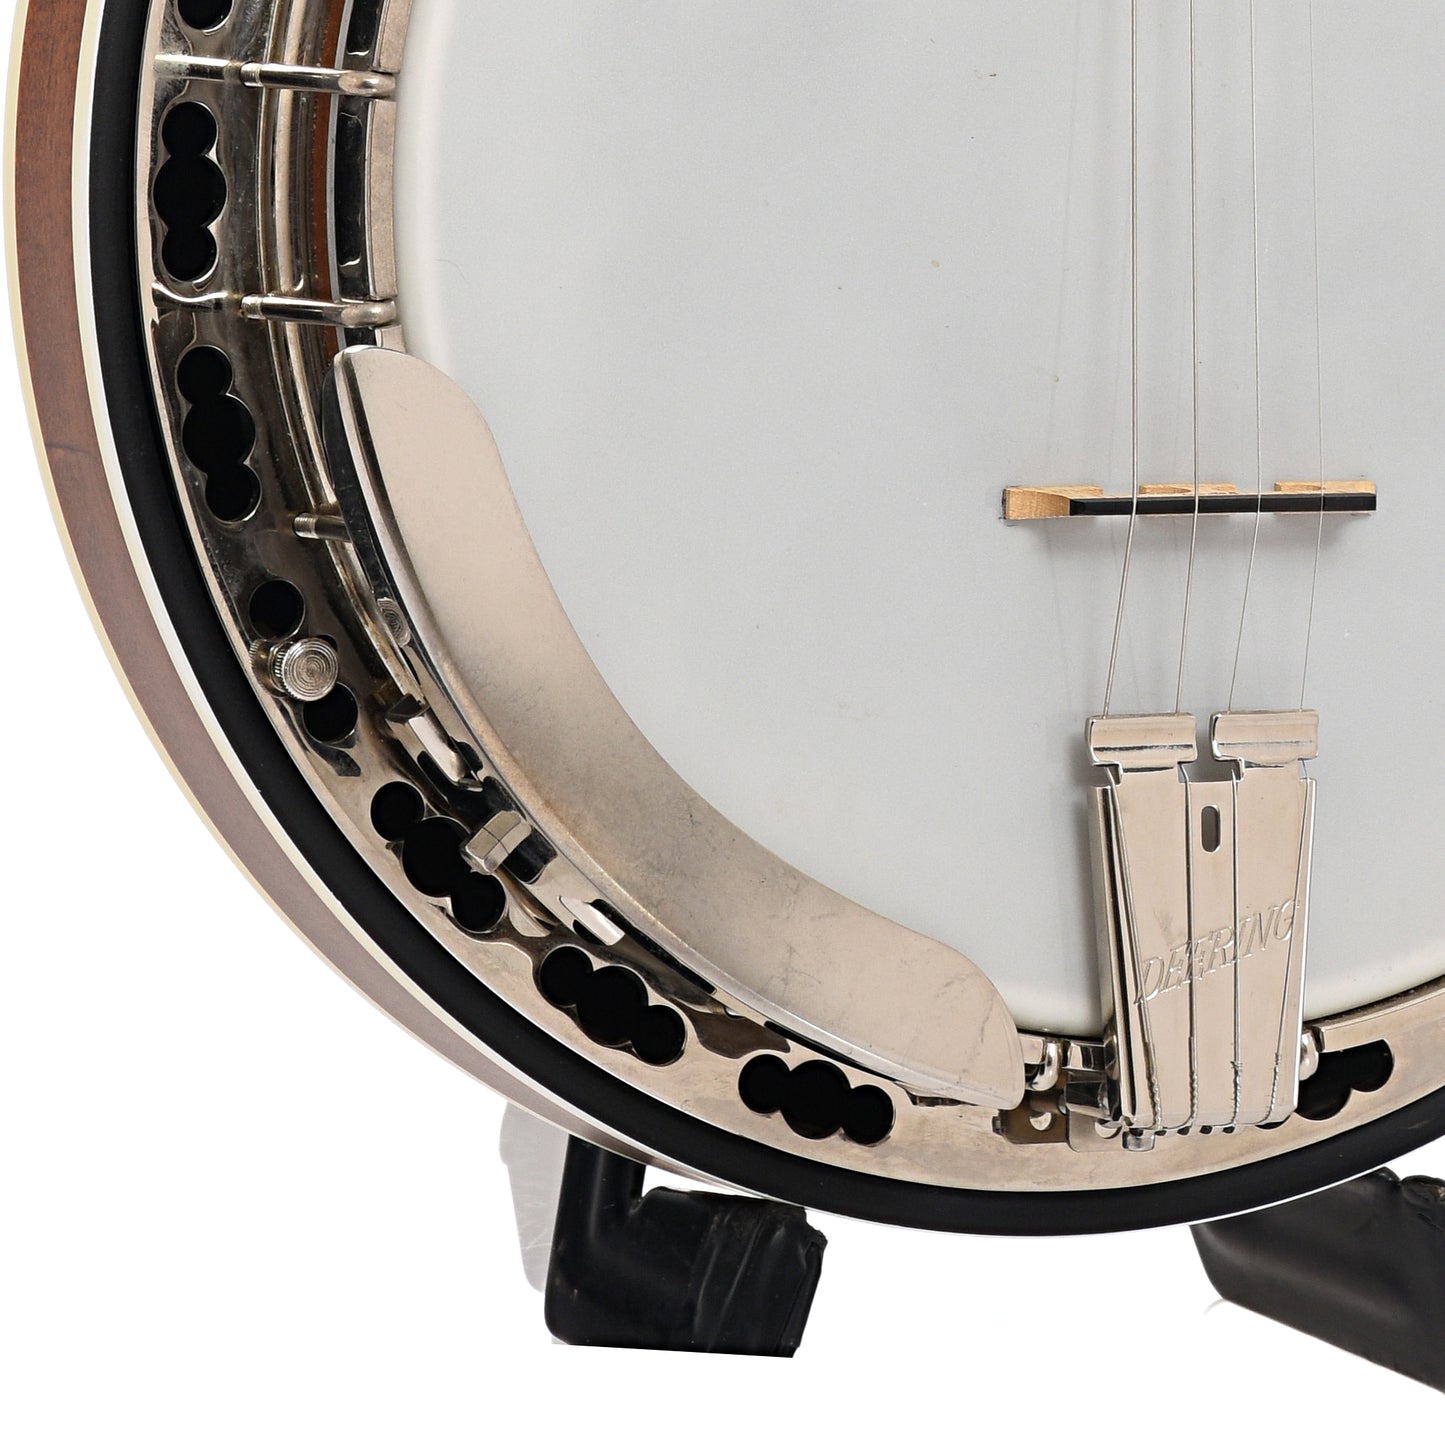 Tailpiece and armrest of Deering Sierra 17-Fret Tenor Banjo 